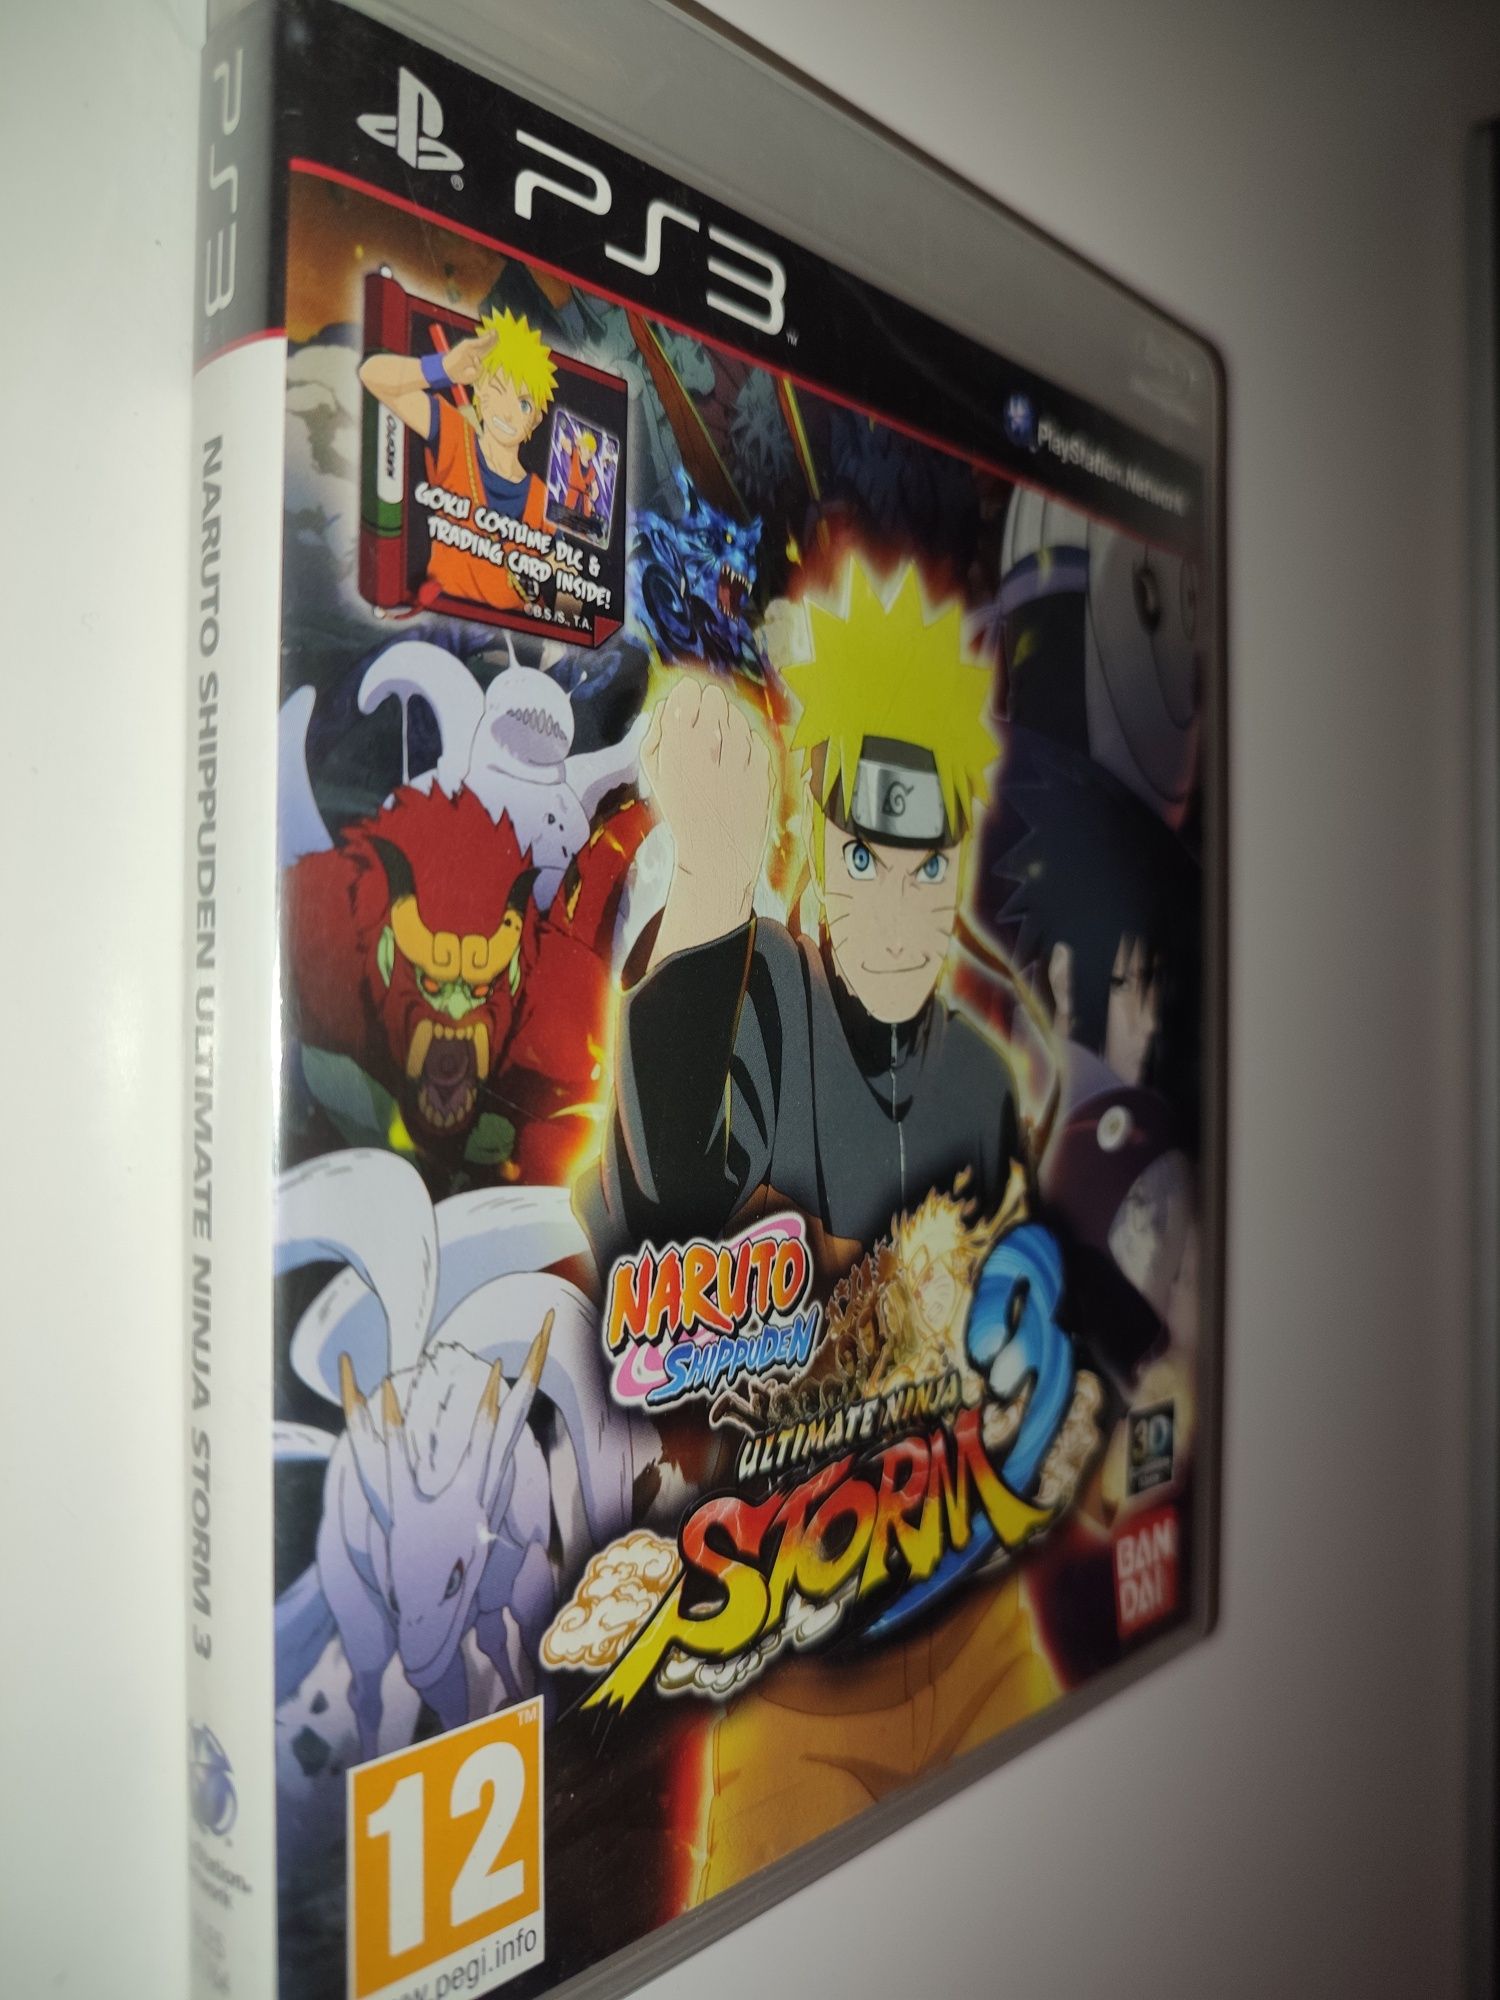 Gra Ps3 Naruto Shippuden Ultimate Ninja Storm 3 gry PlayStation 3 Hit